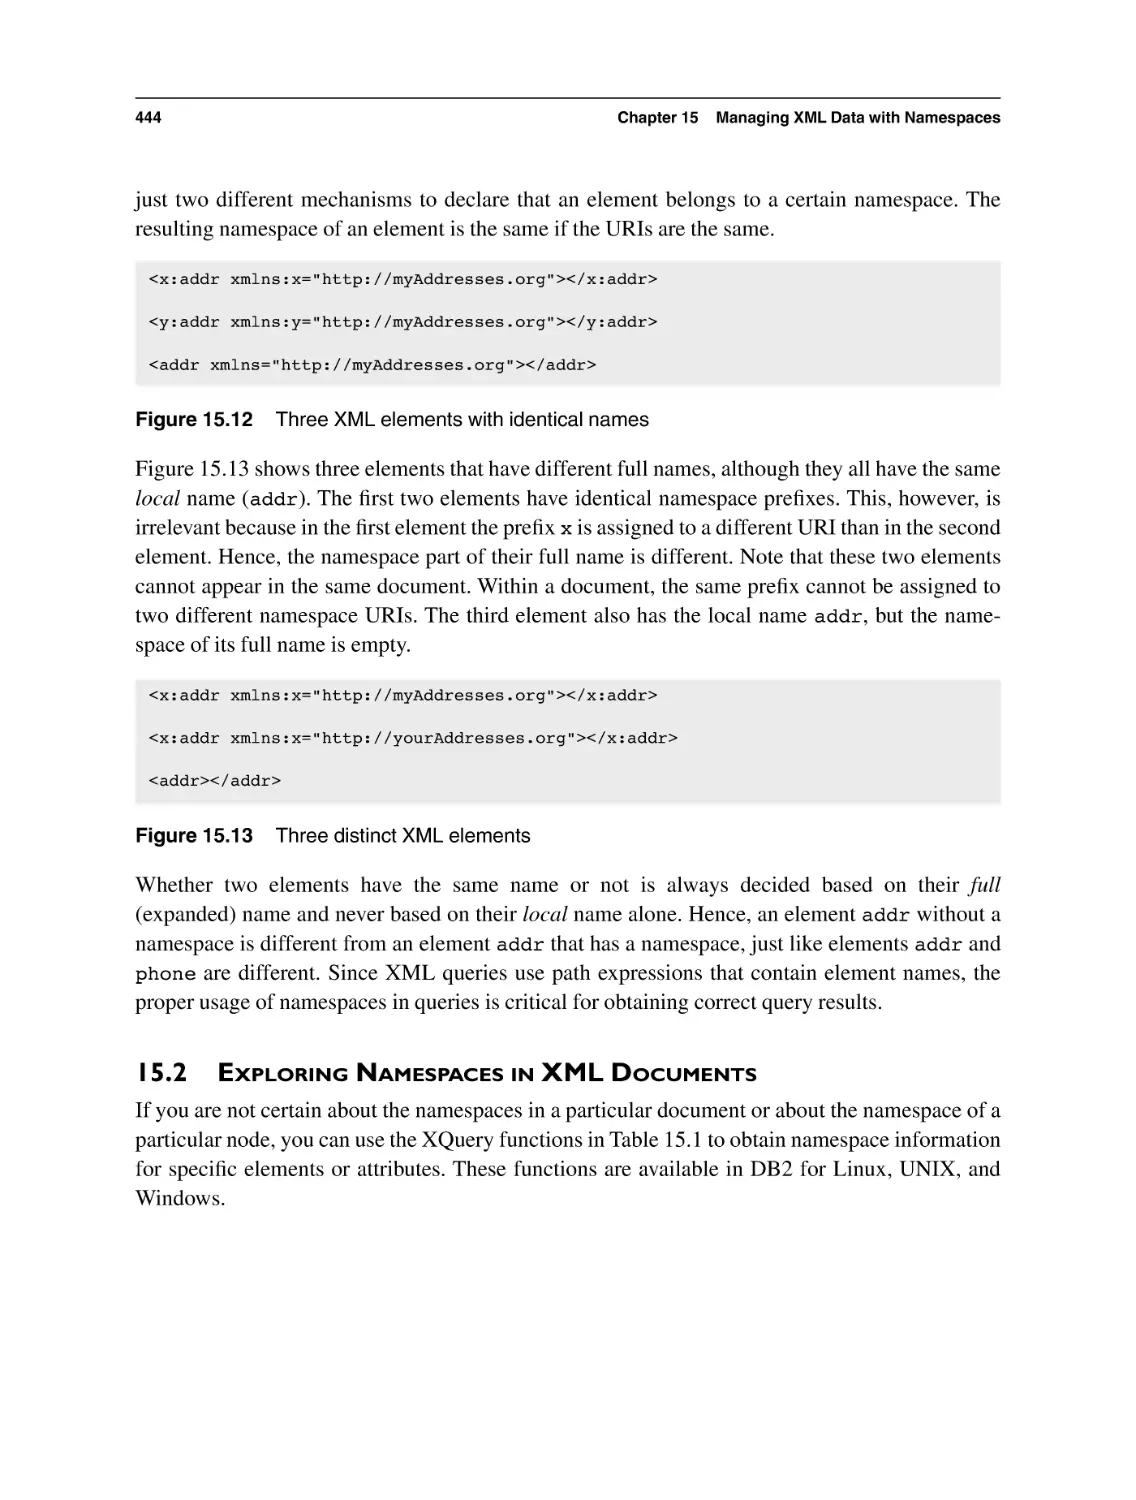 15.2 Exploring Namespaces in XML Documents